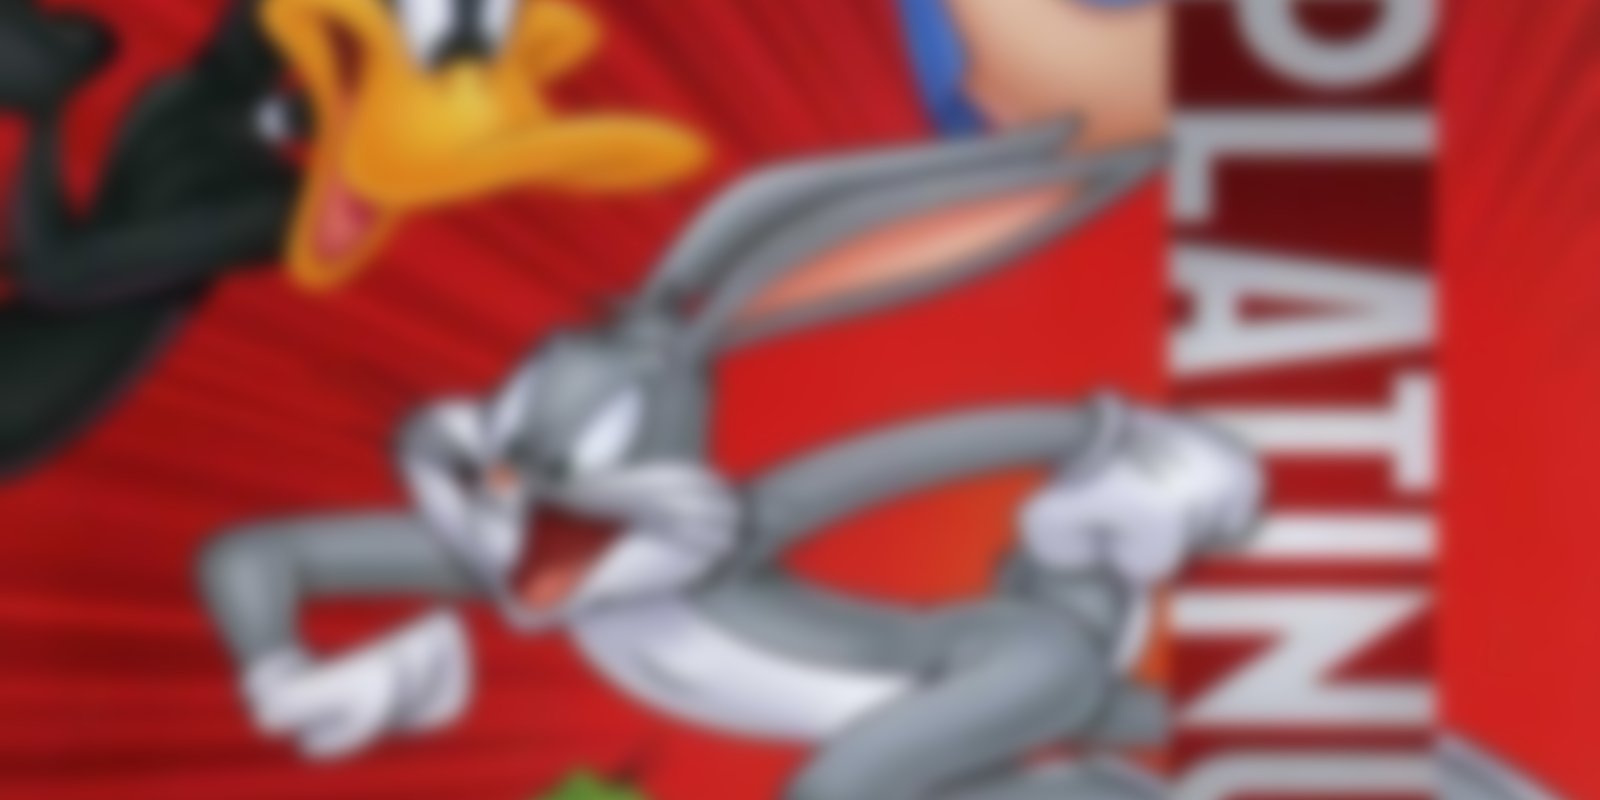 Looney Tunes Platinum Collection - Volume 2